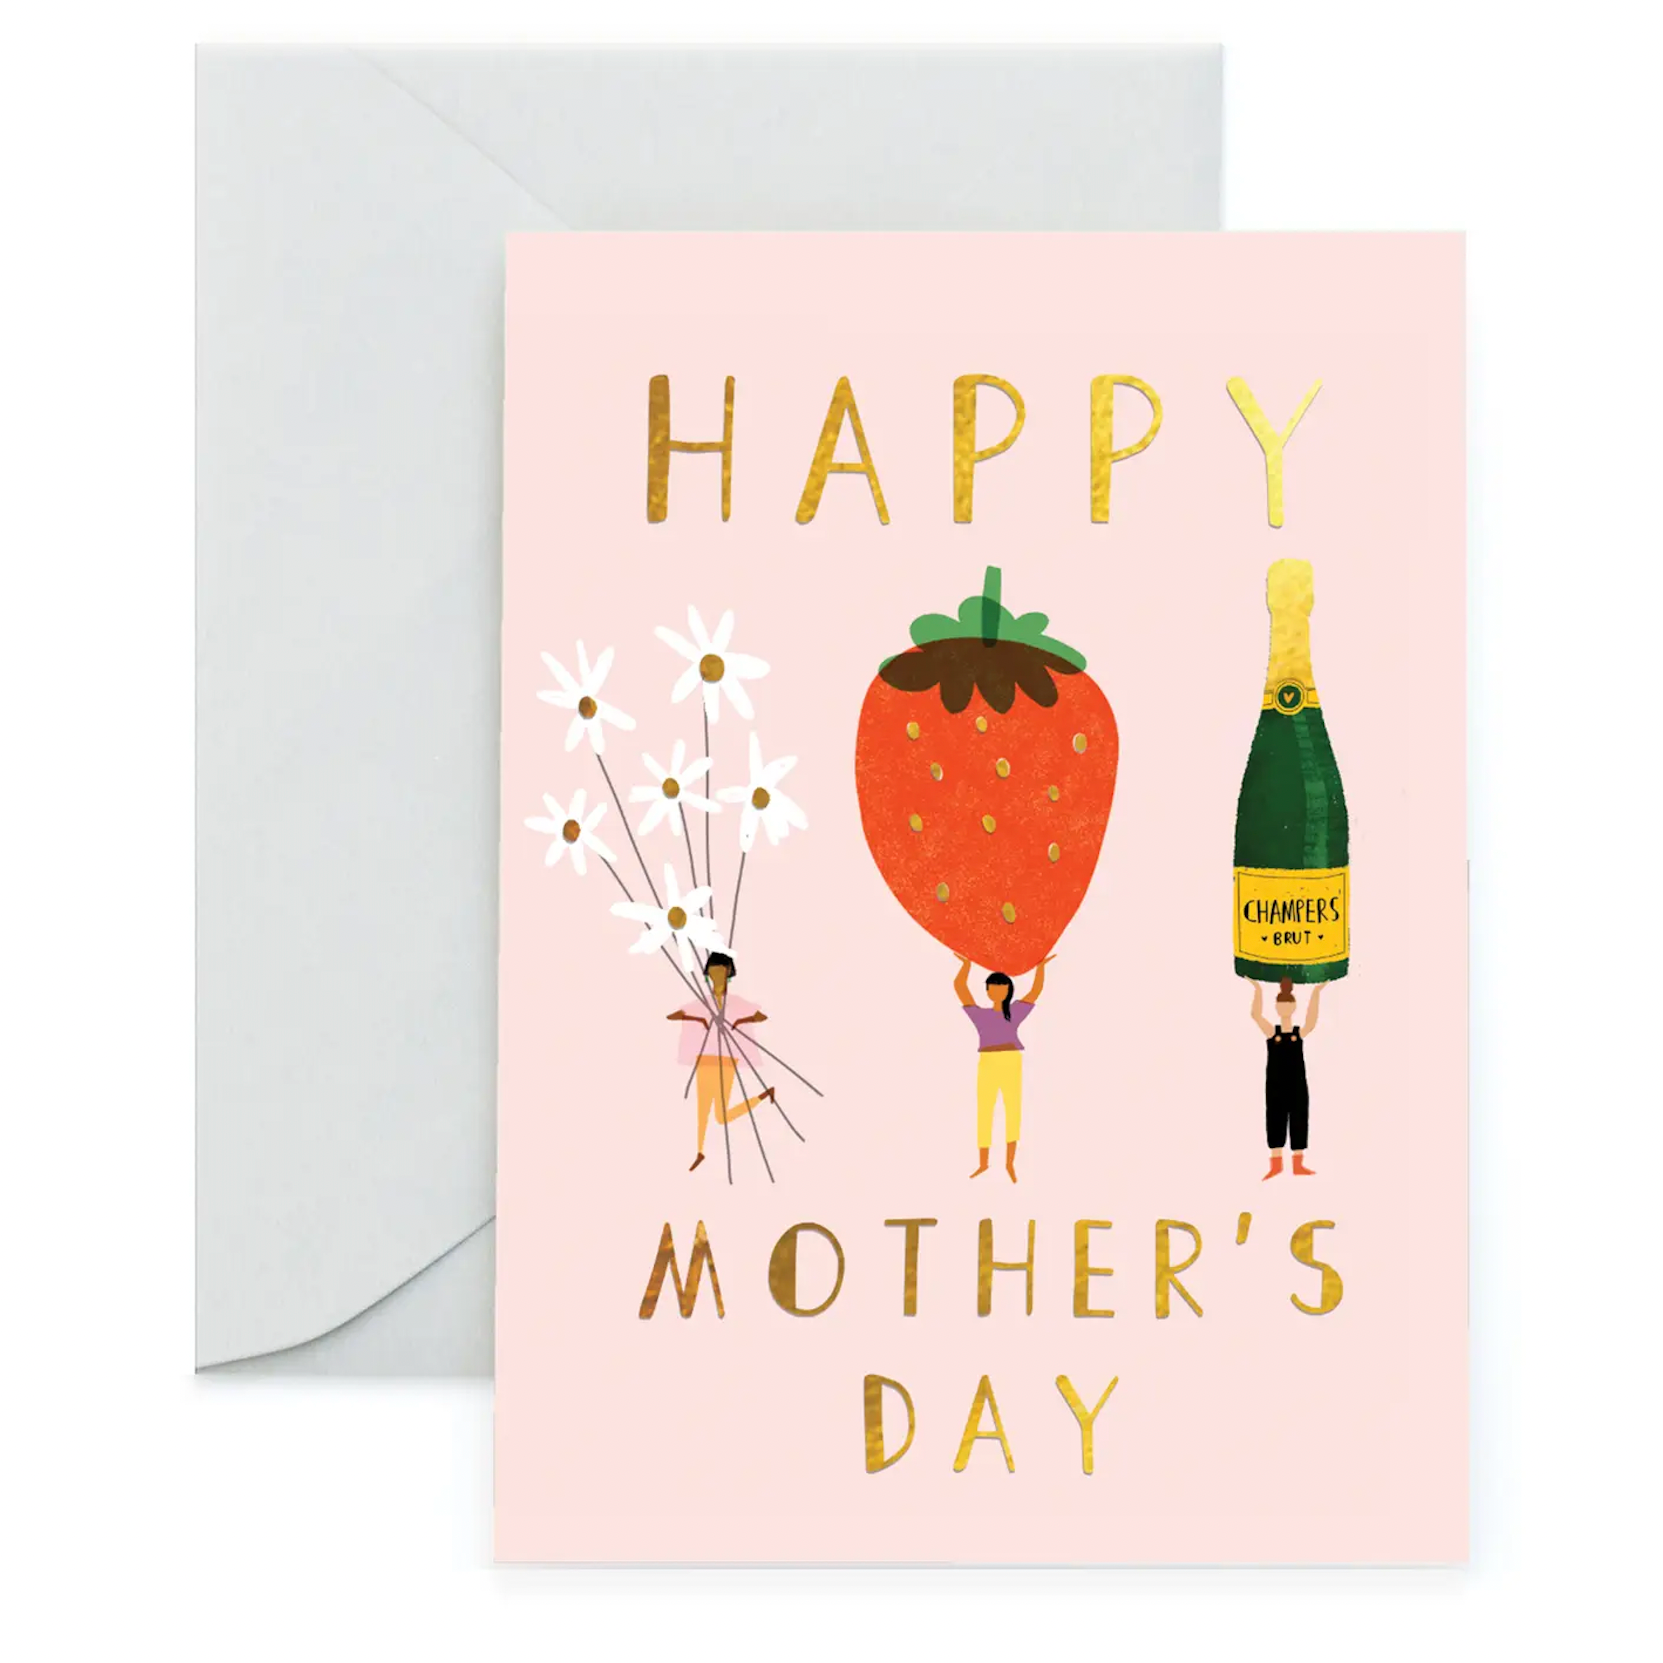 Happy Mothers Day - Glückwunschkarte mit Kuvert